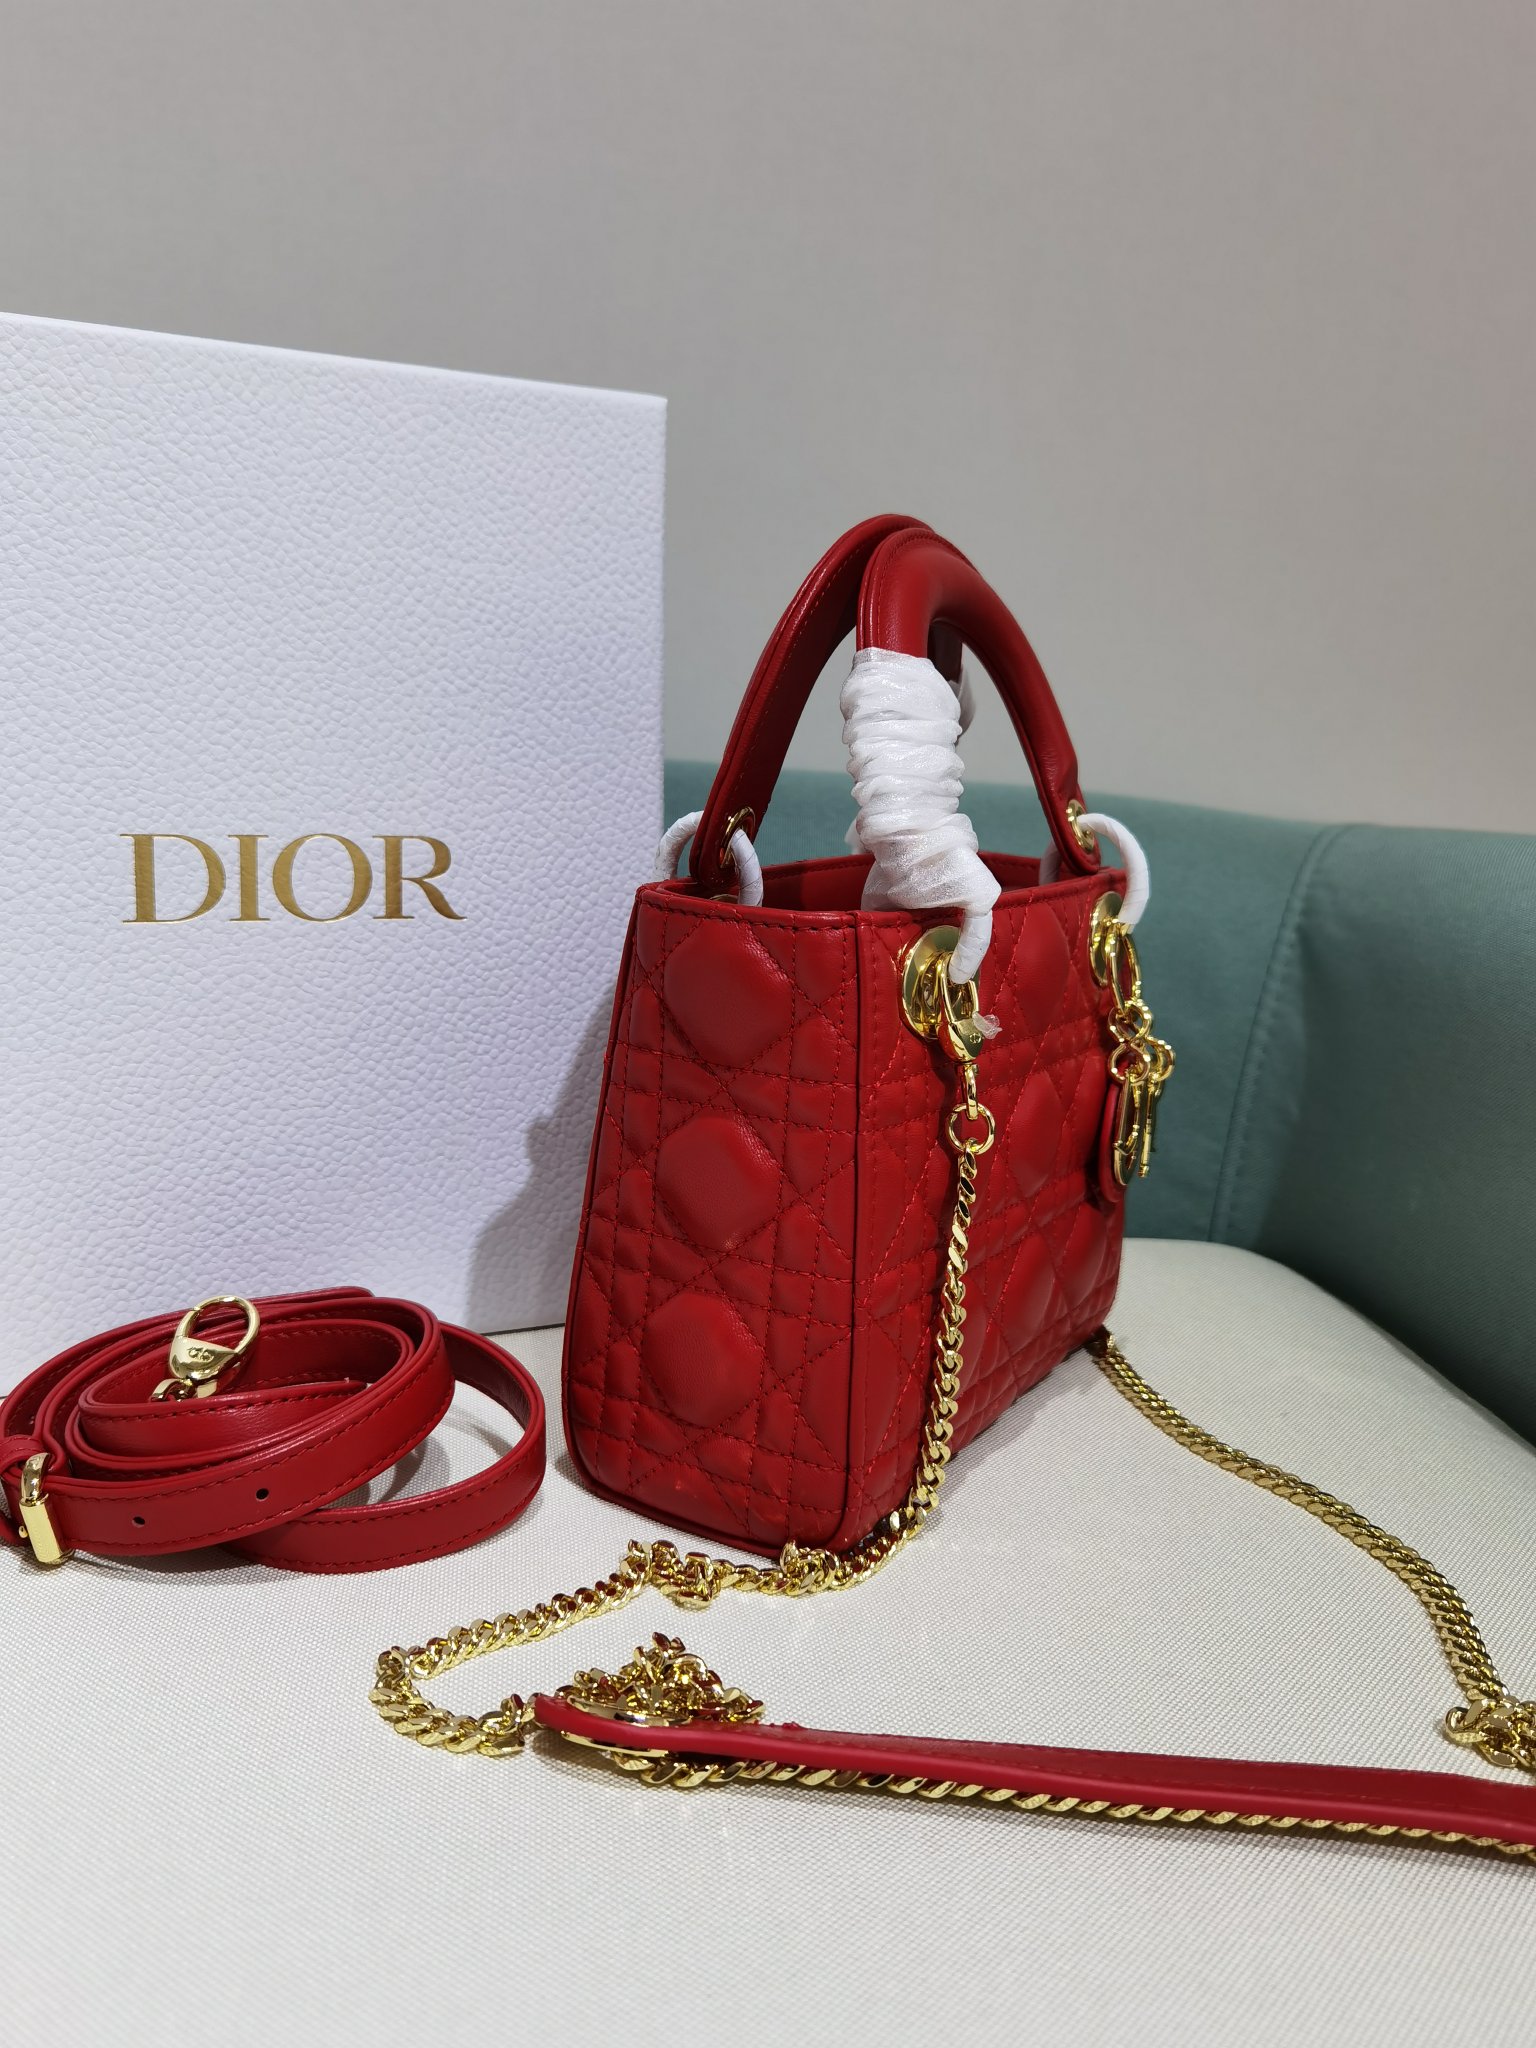 My Lady Dior 专柜新款 单肩手提包